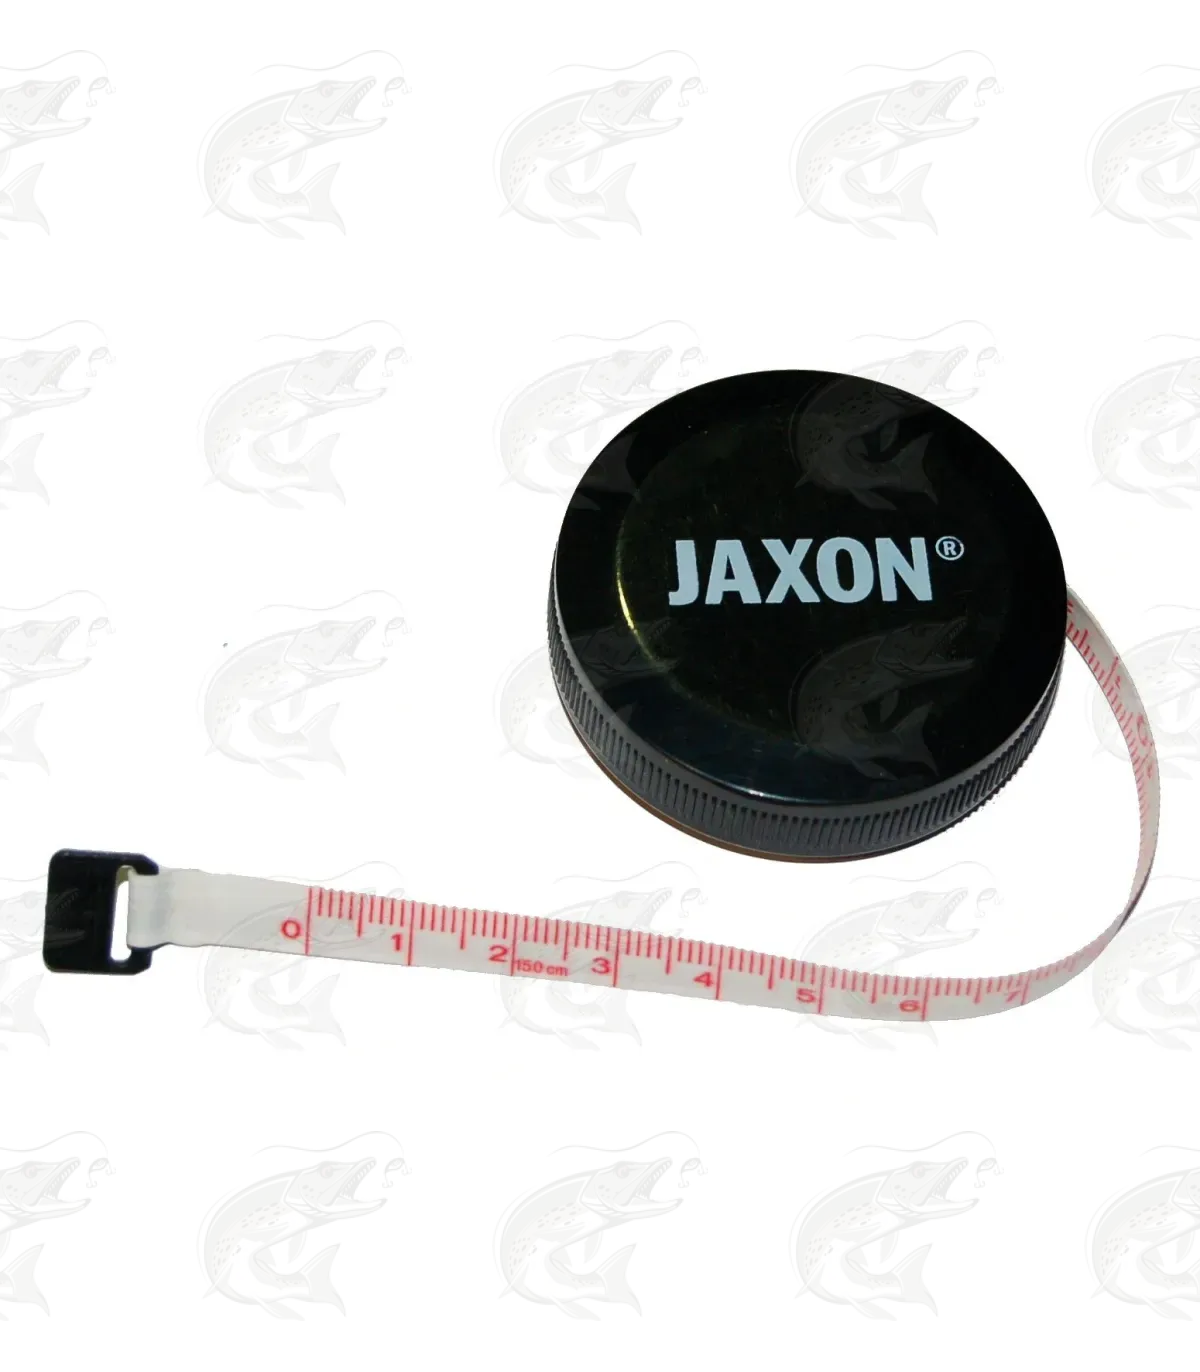 Jaxon Fish Ruler / Measuring Tape / Tapeline